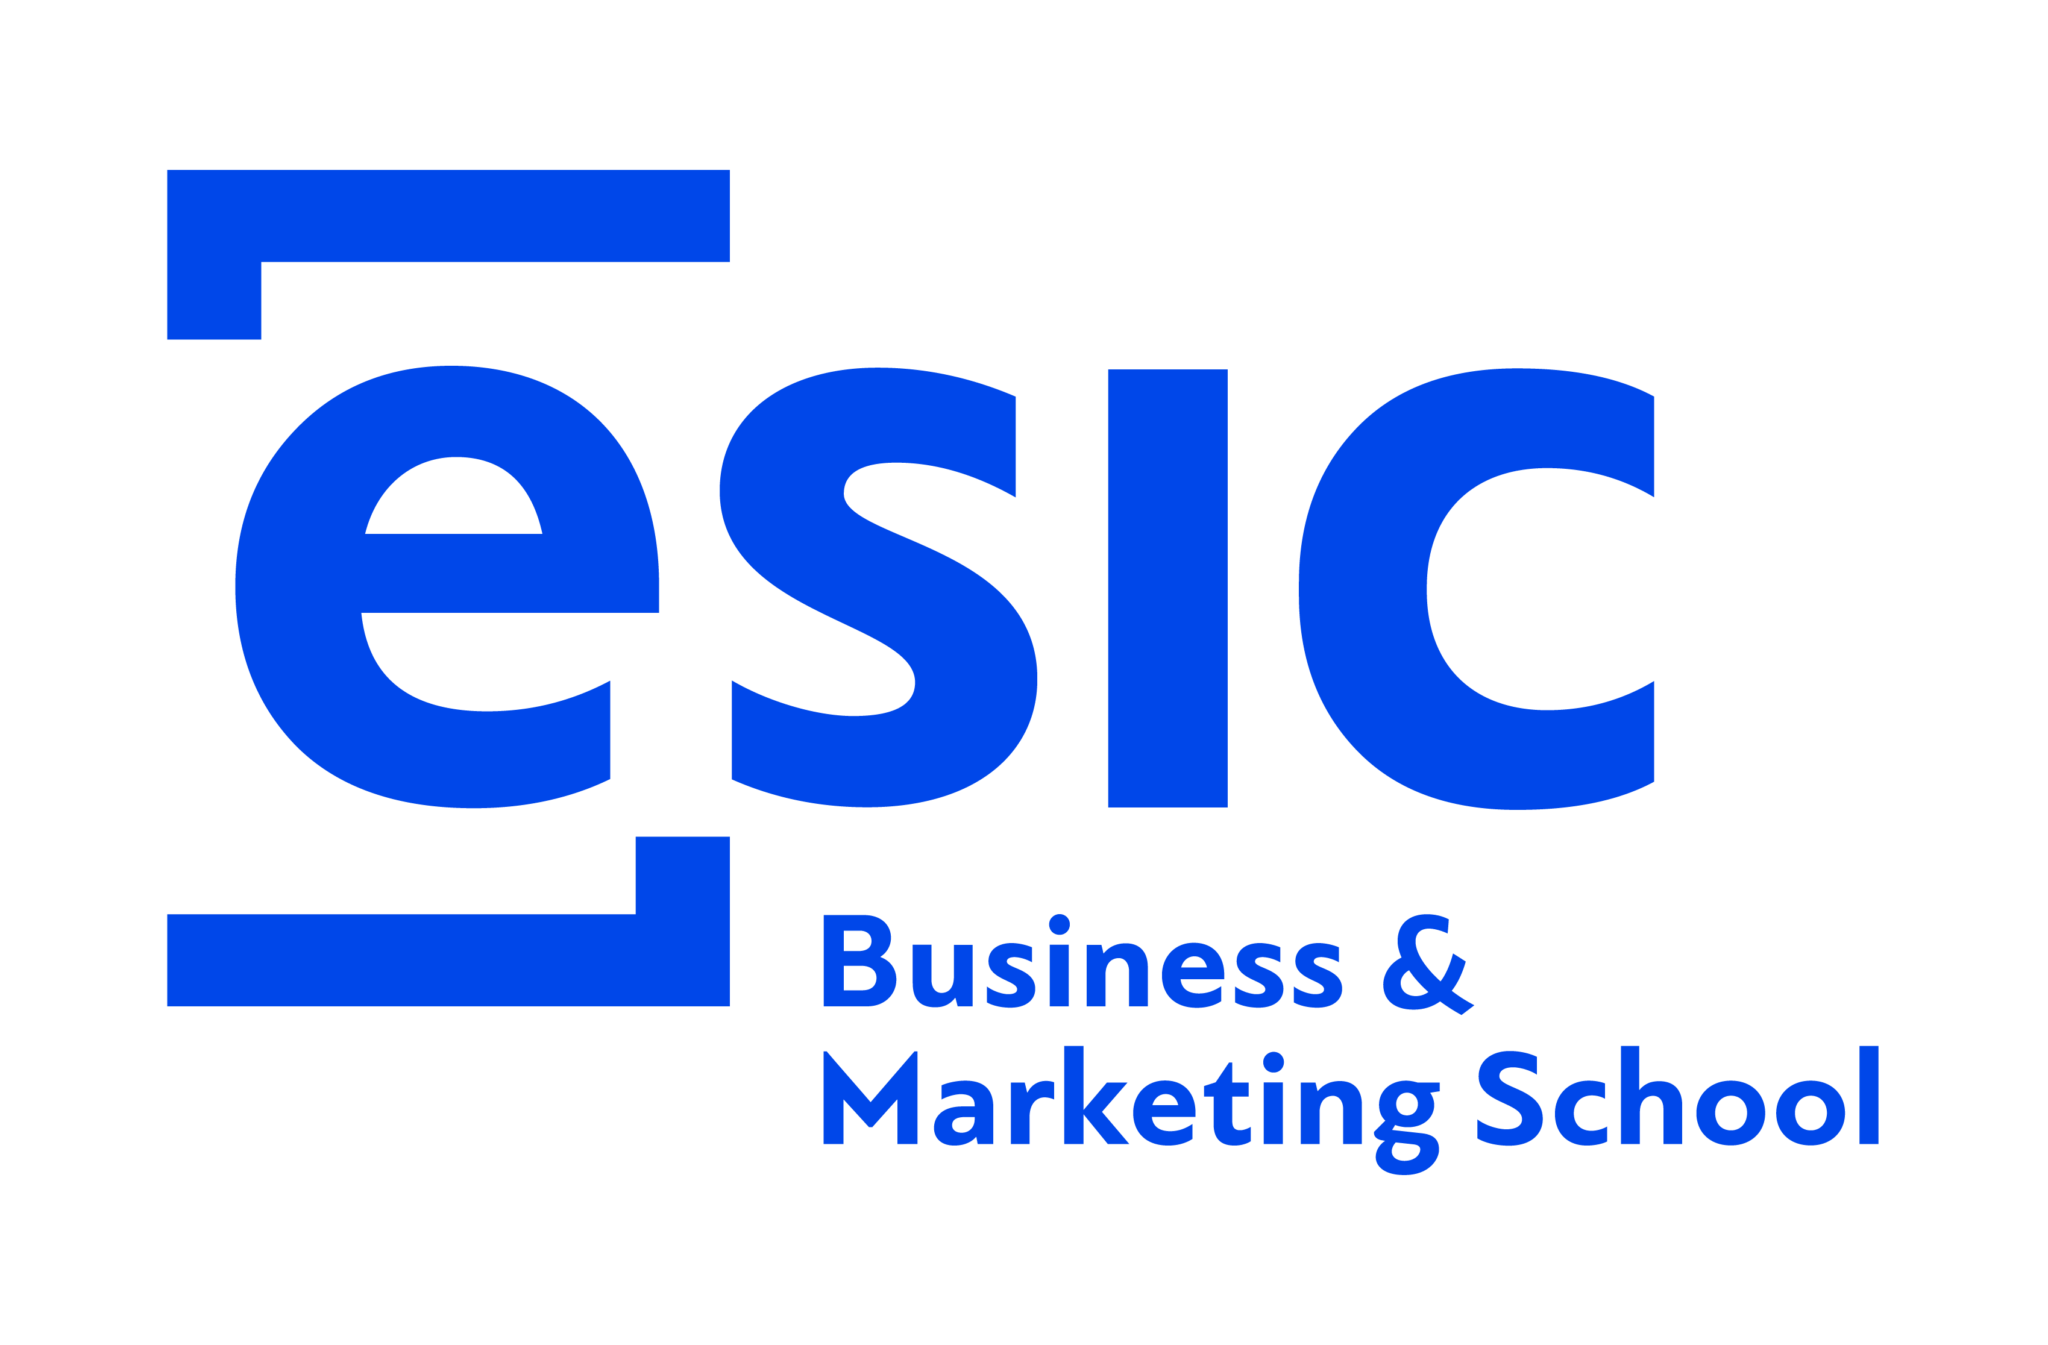 ESIC Logo 2048x1345 1